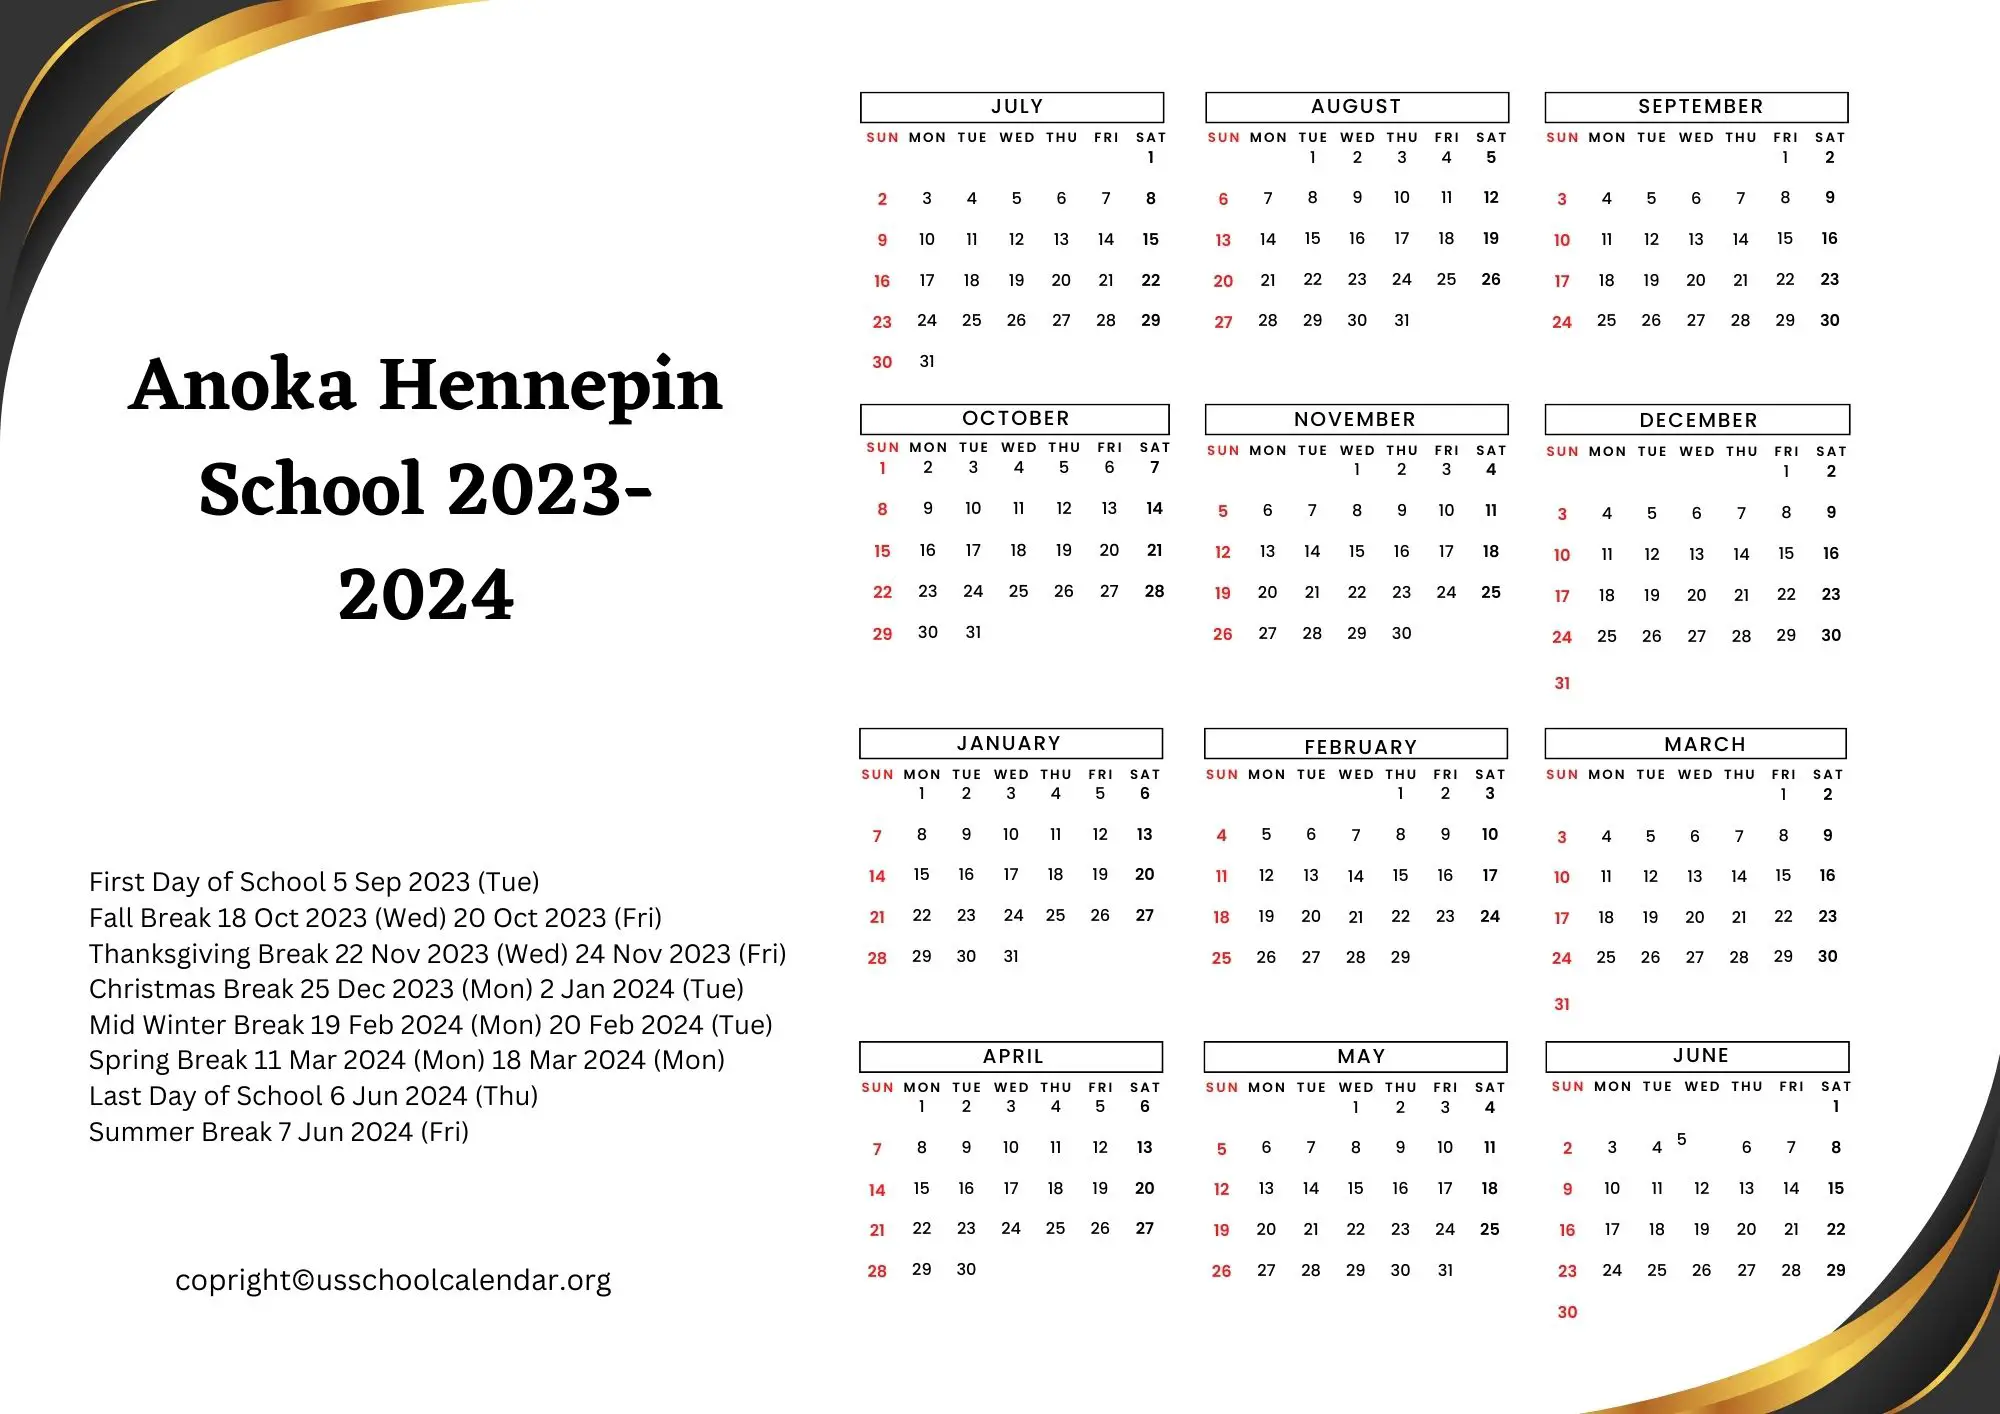 Anoka Hennepin School Calendar with Holidays 2023-2024